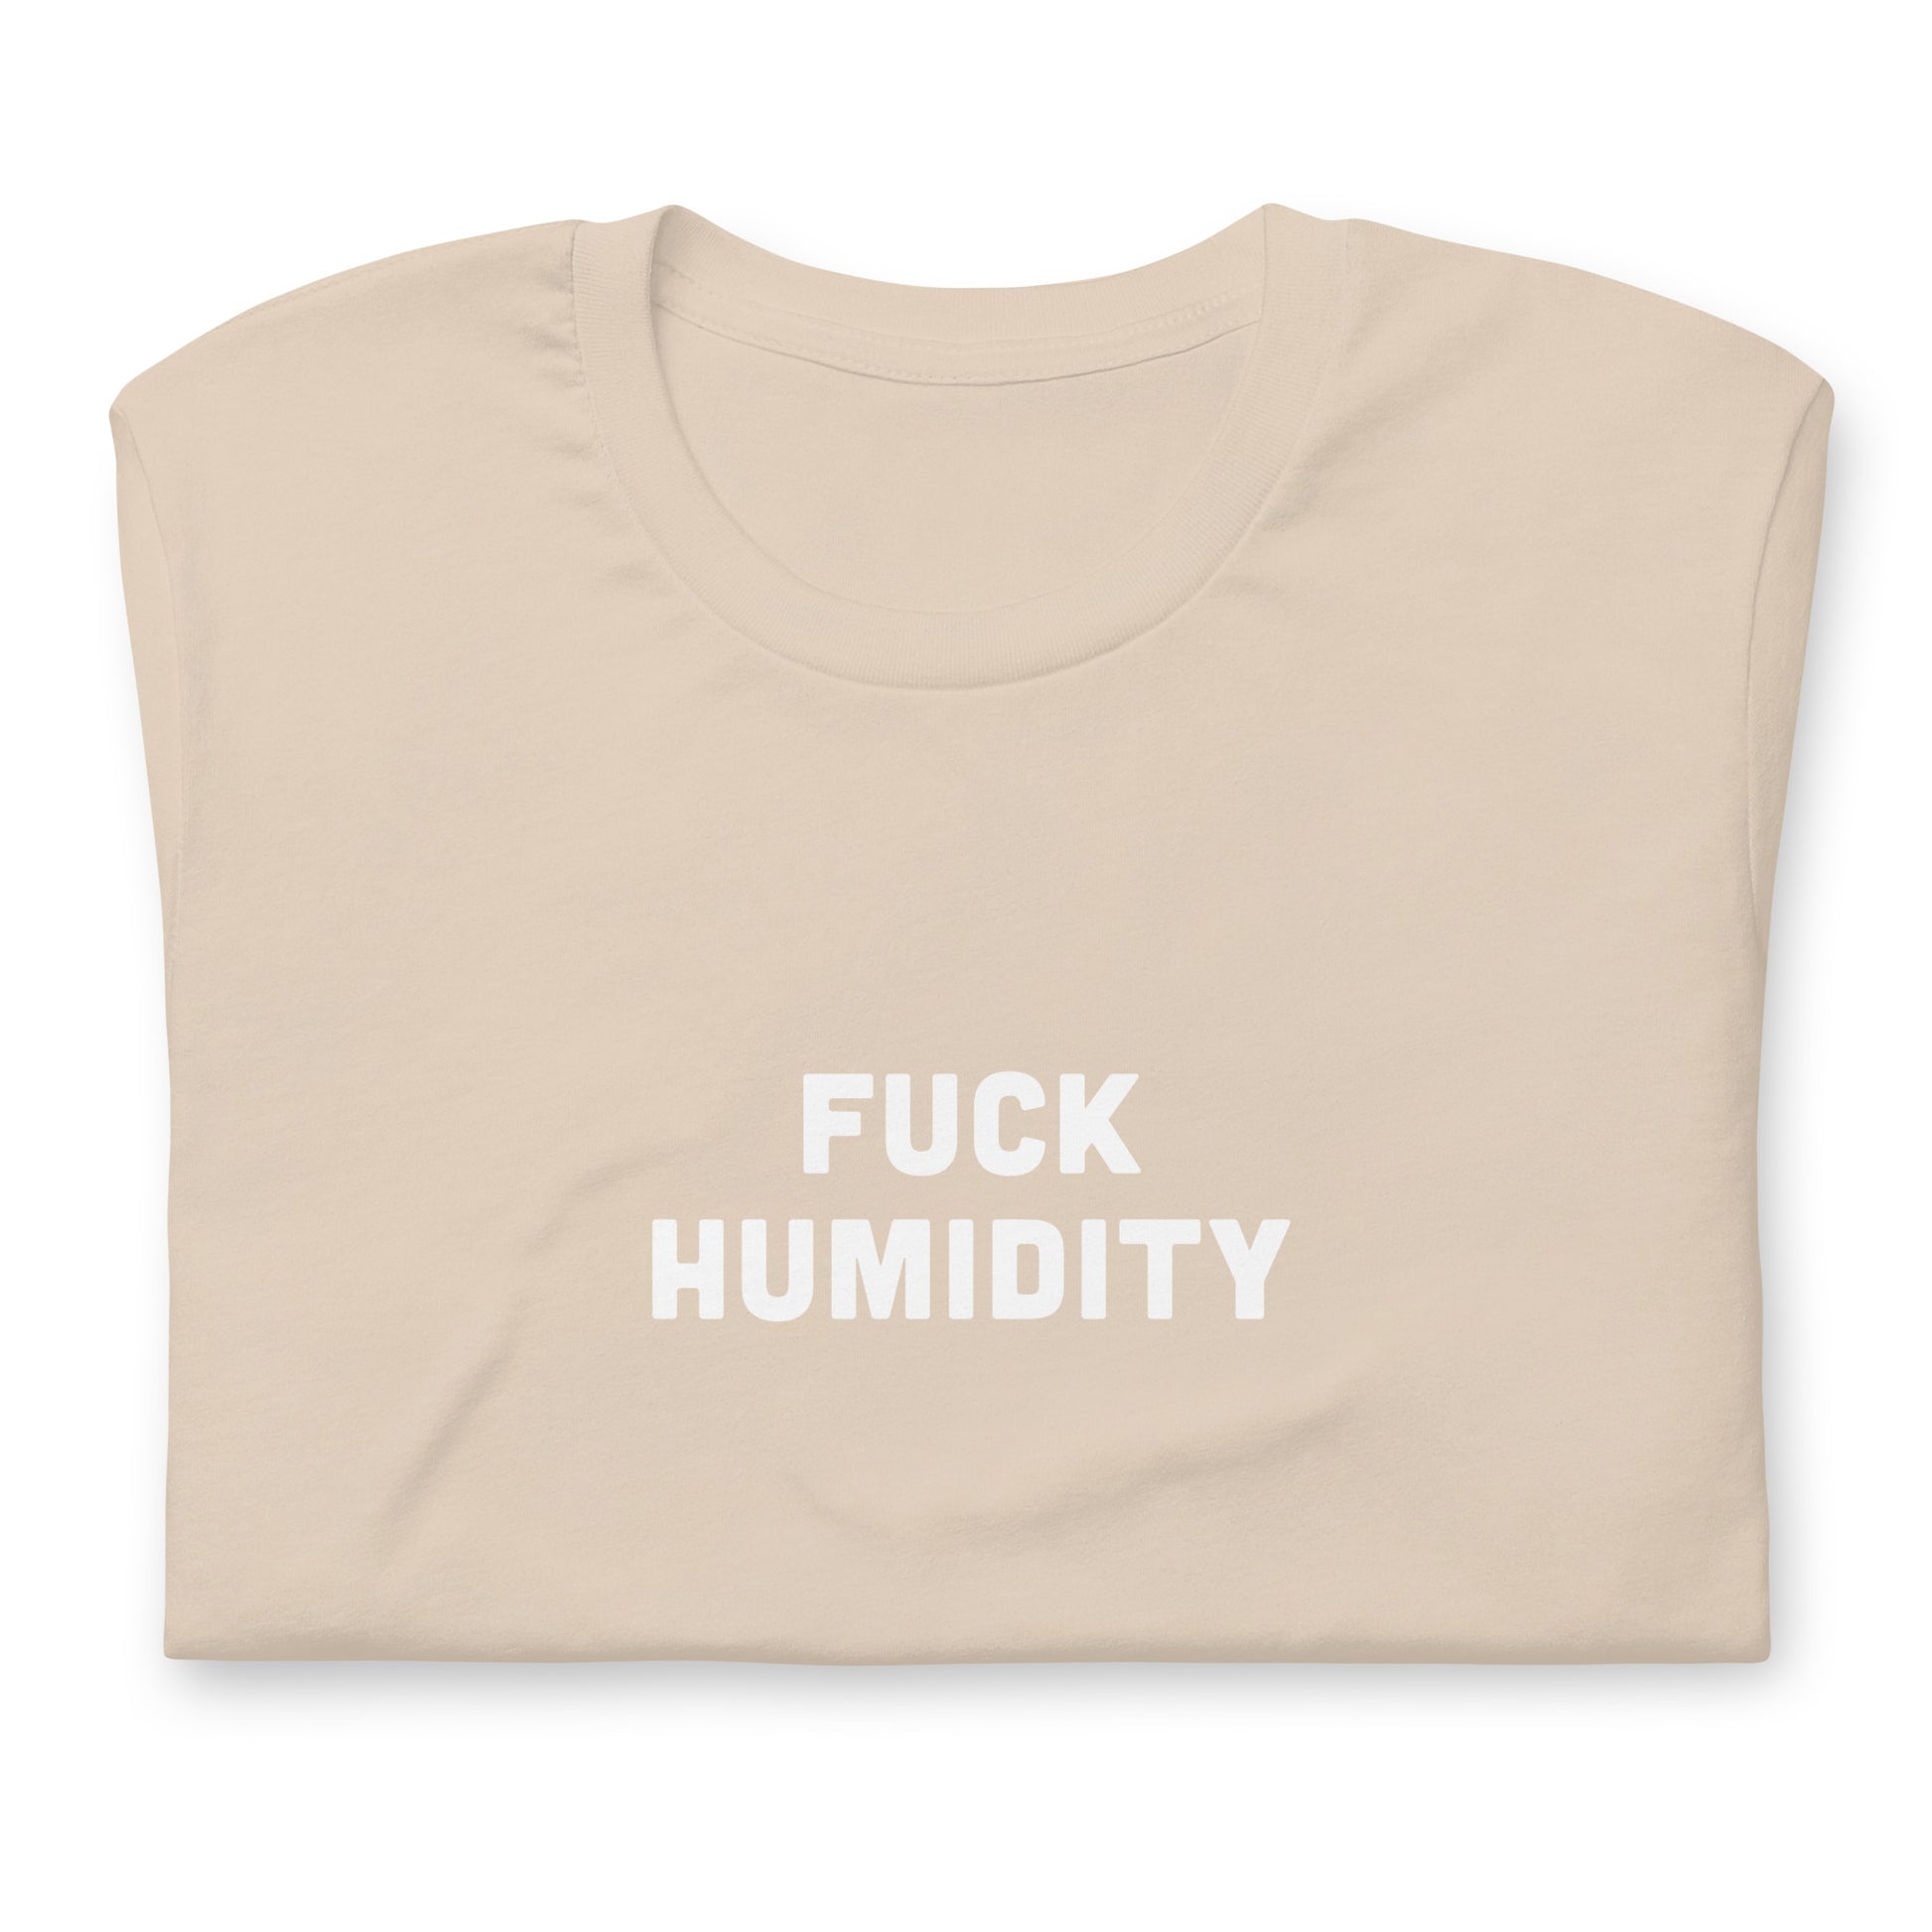 Fuck Humidity T-Shirt Size L Color Asphalt